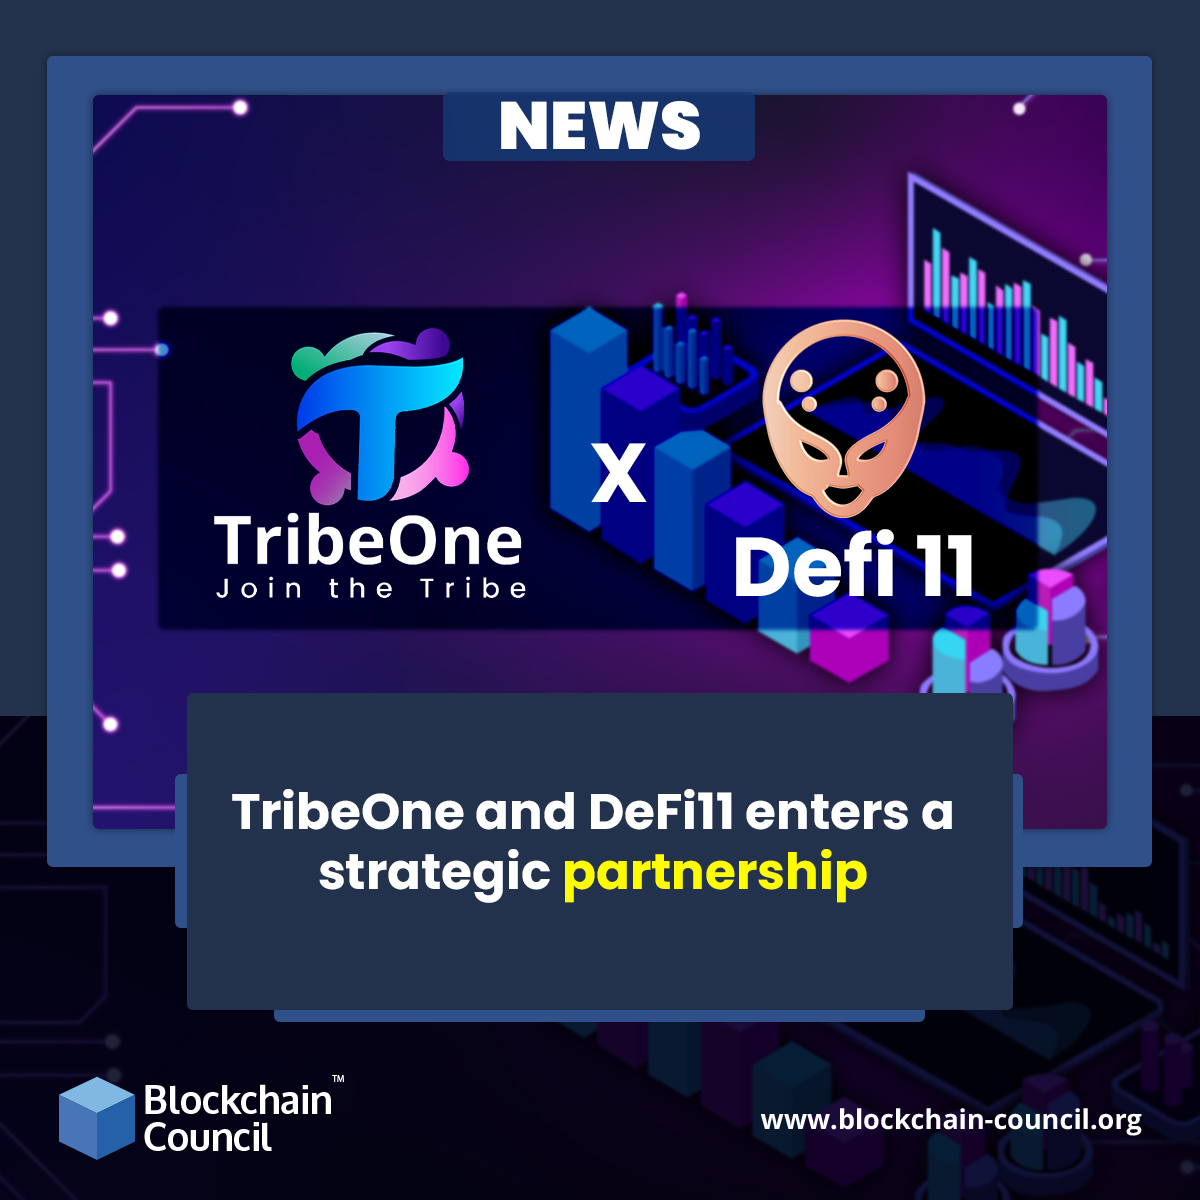 TribeOne and DeFi11 enters a strategic partnership